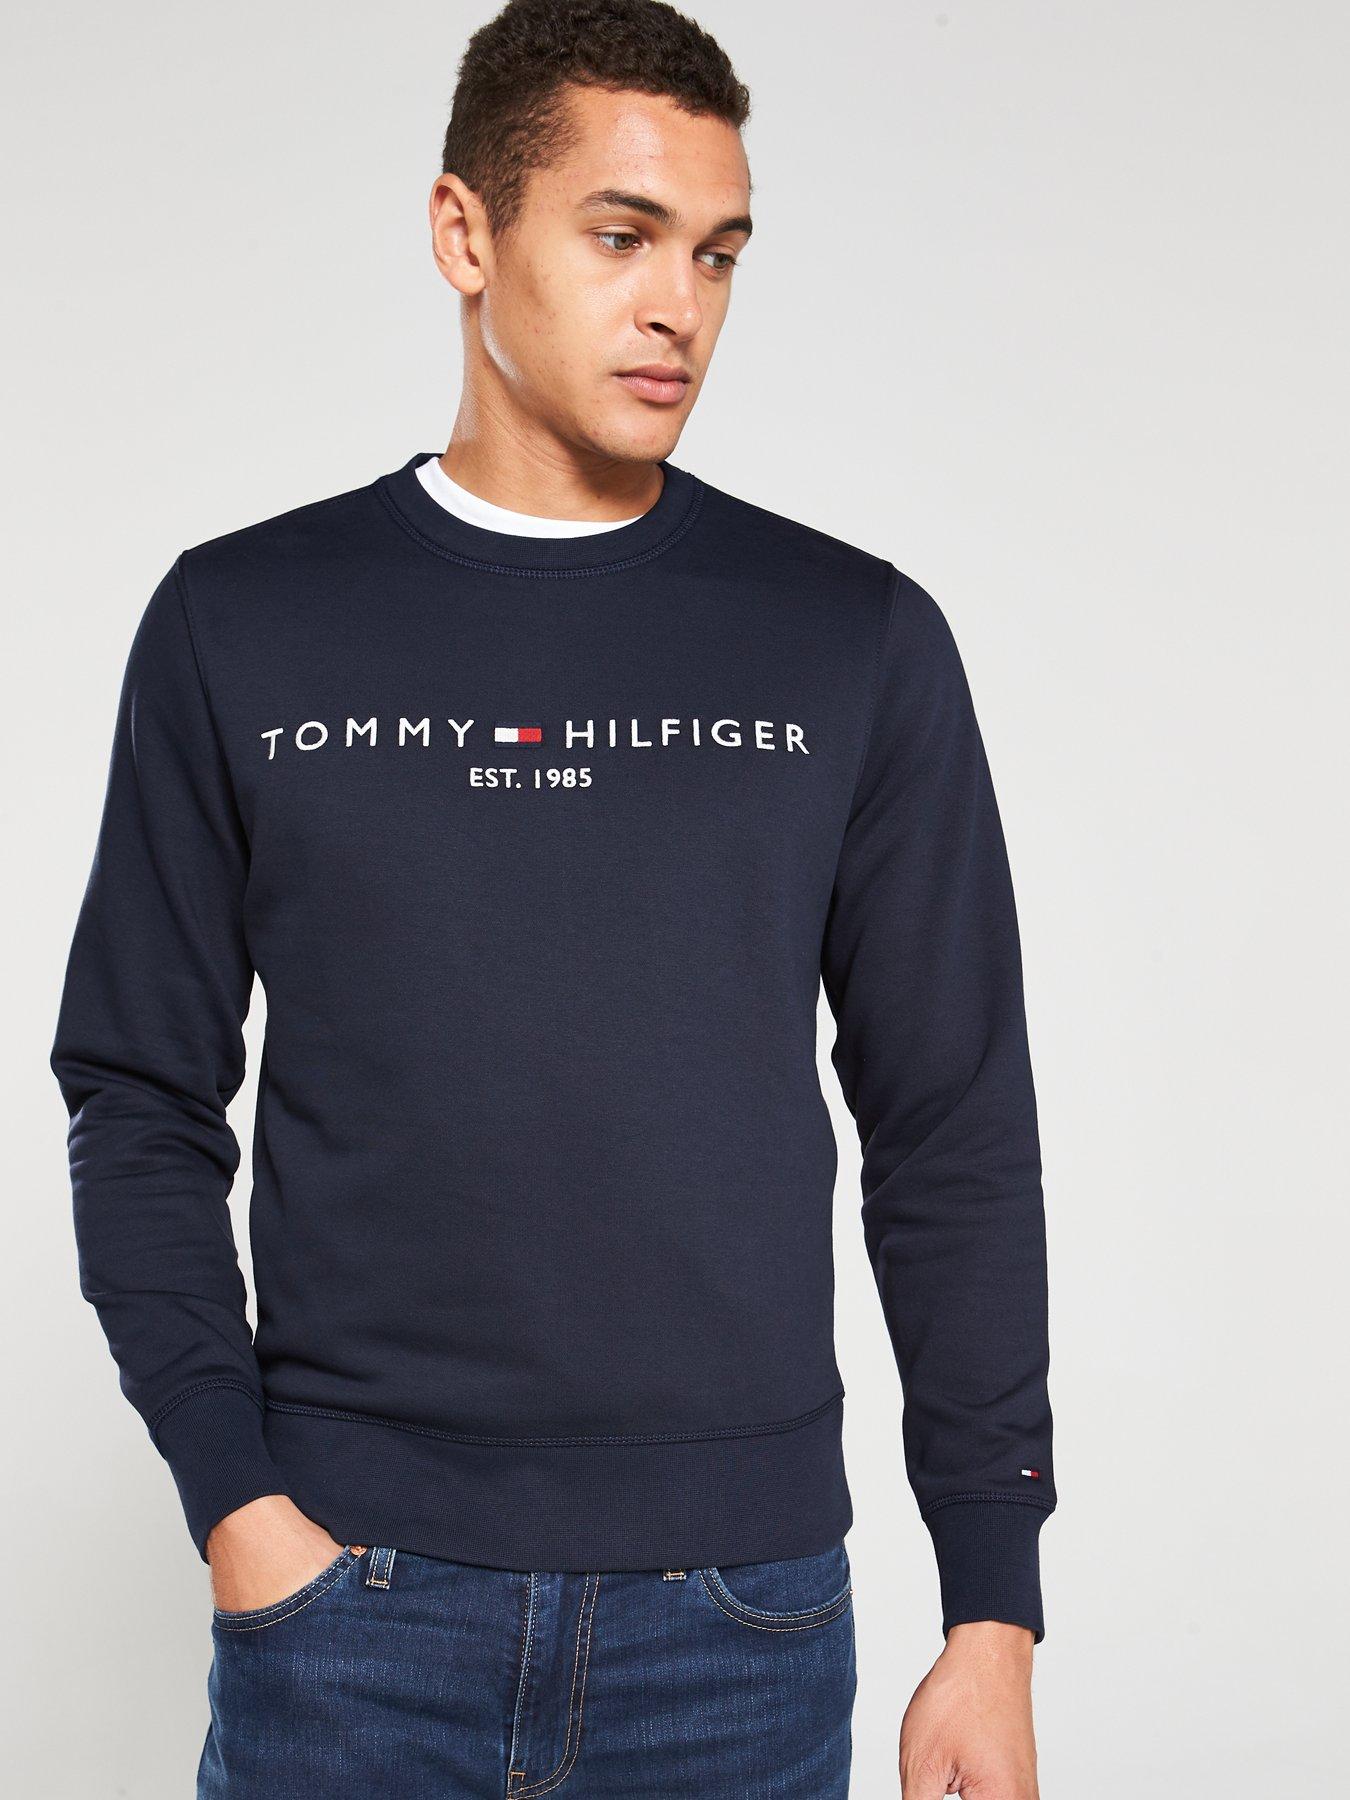 mens navy tommy hilfiger sweatshirt